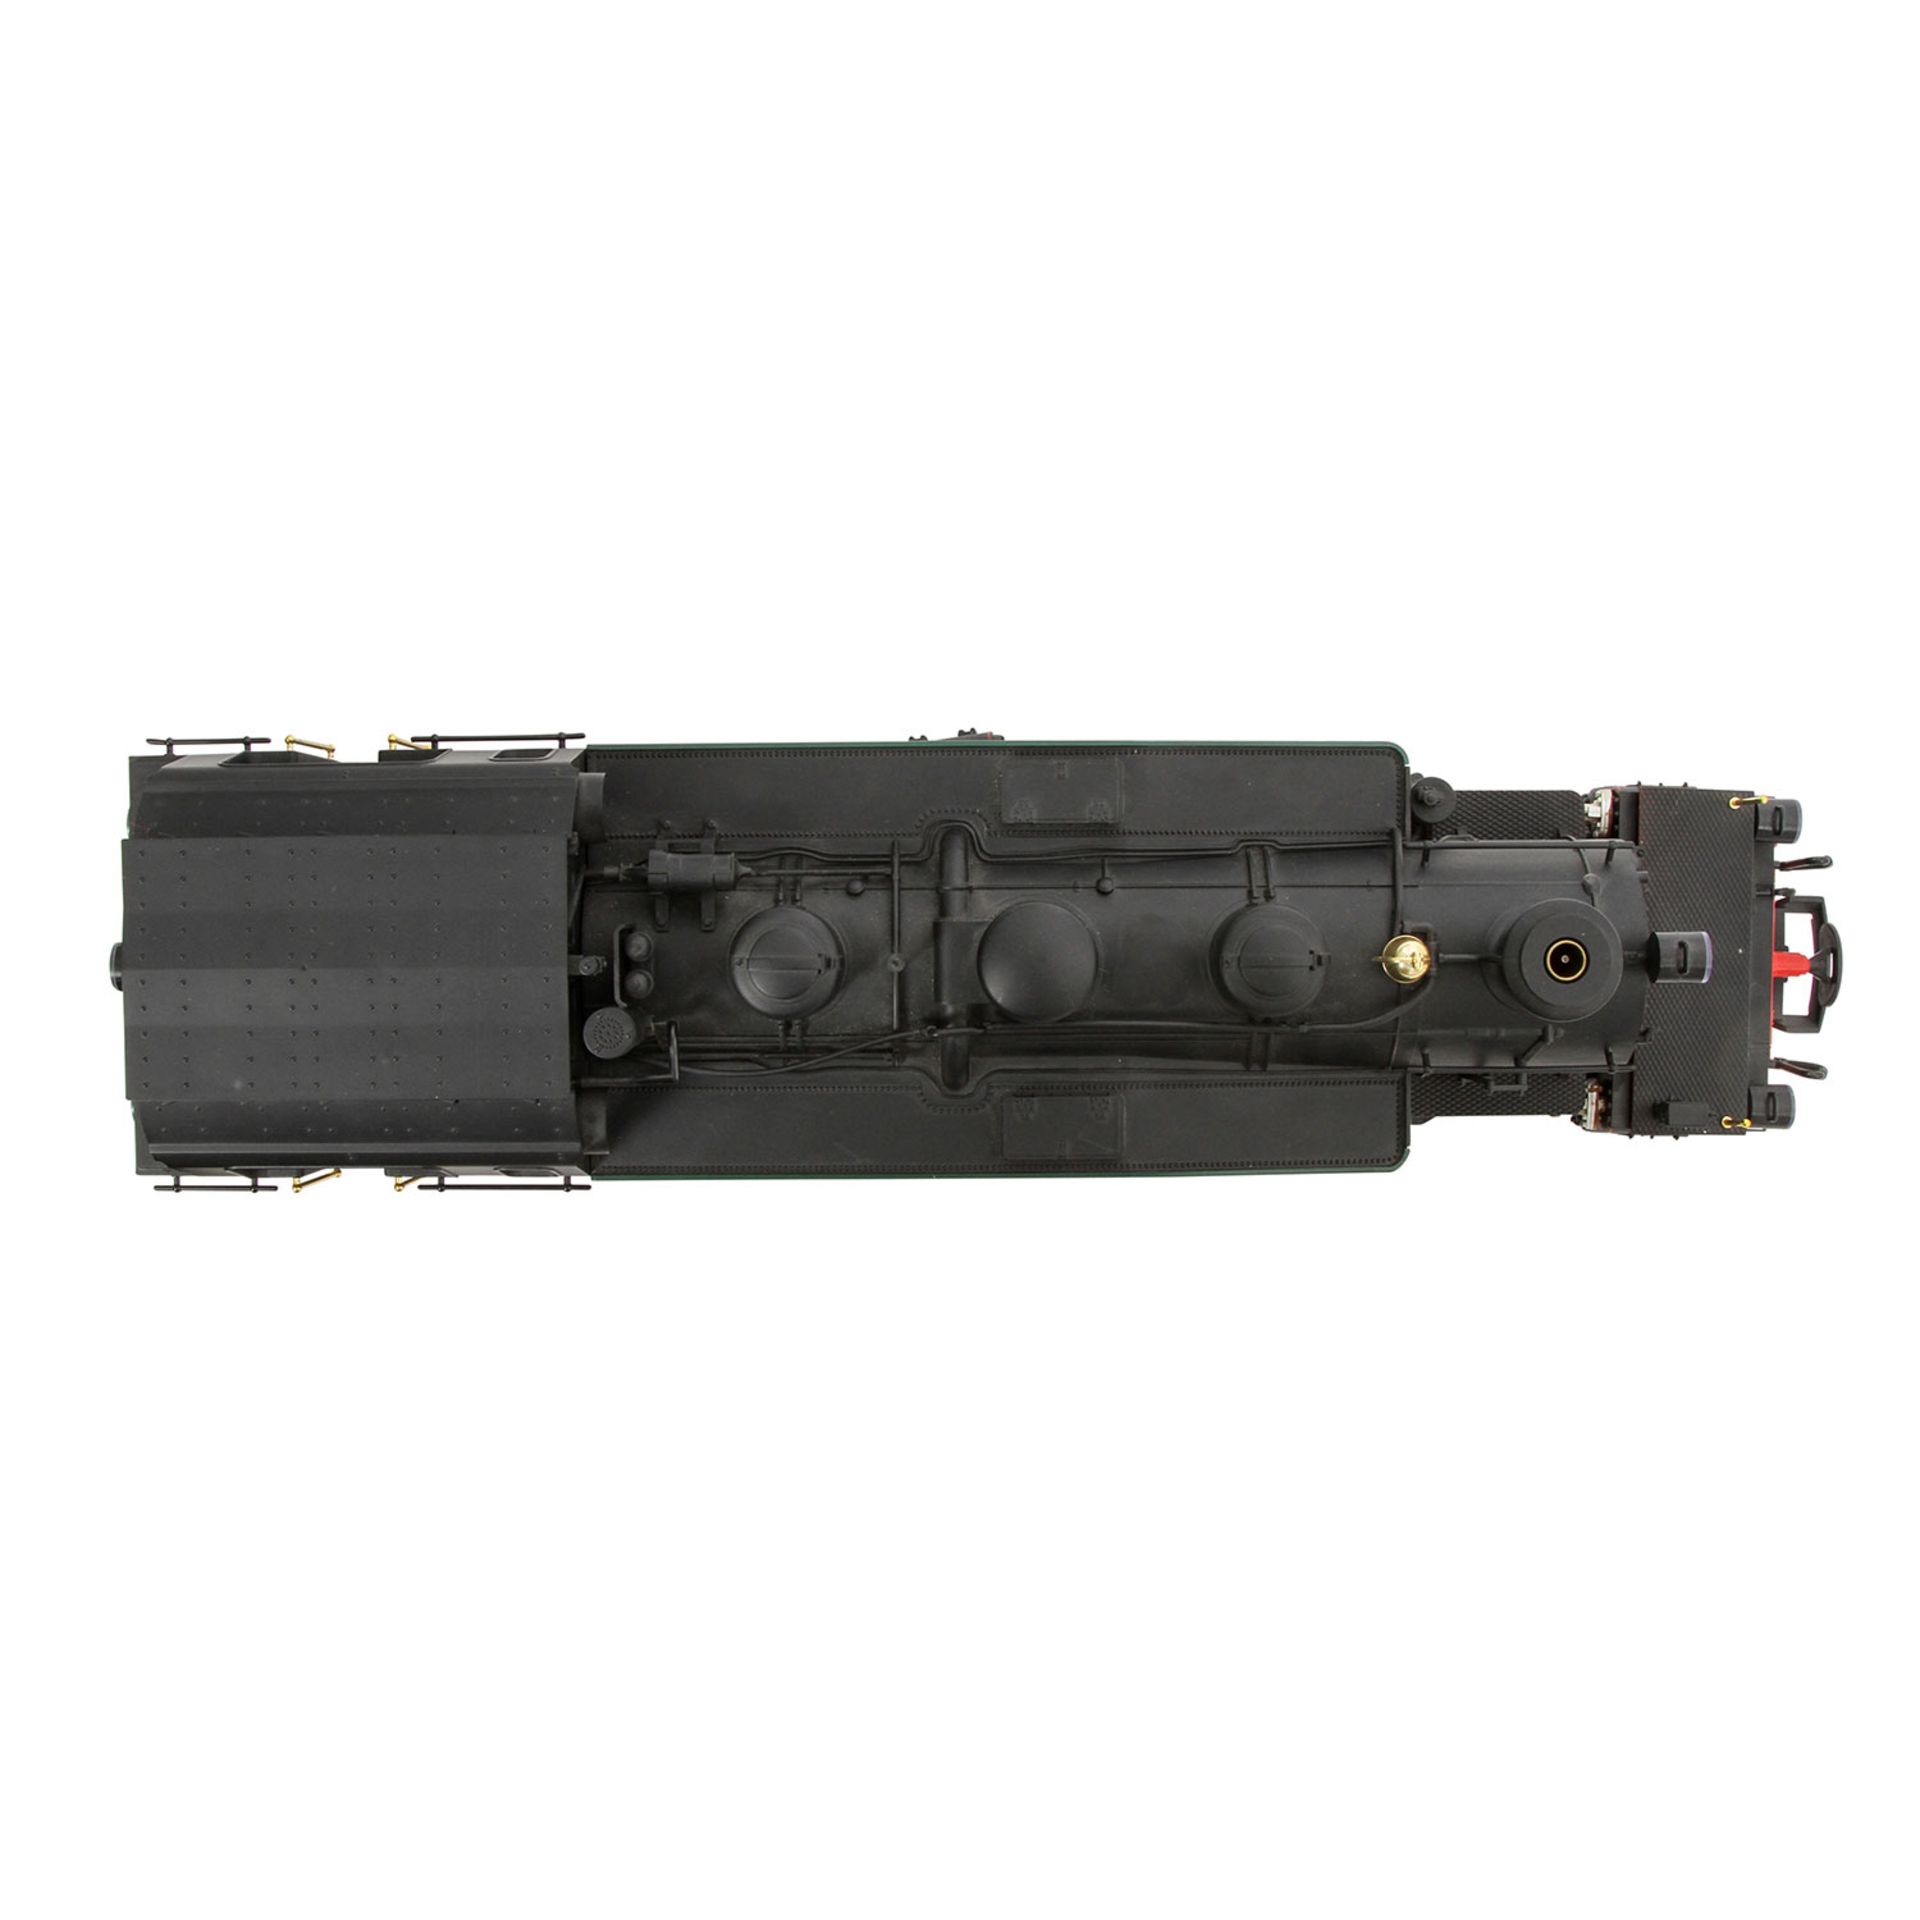 LGB Mallet-Tenderlok 2085 D, Spur G, grün/schwarz, BN 104, SEG, Dampfgenerator. Im Originalkarton, - Image 6 of 8